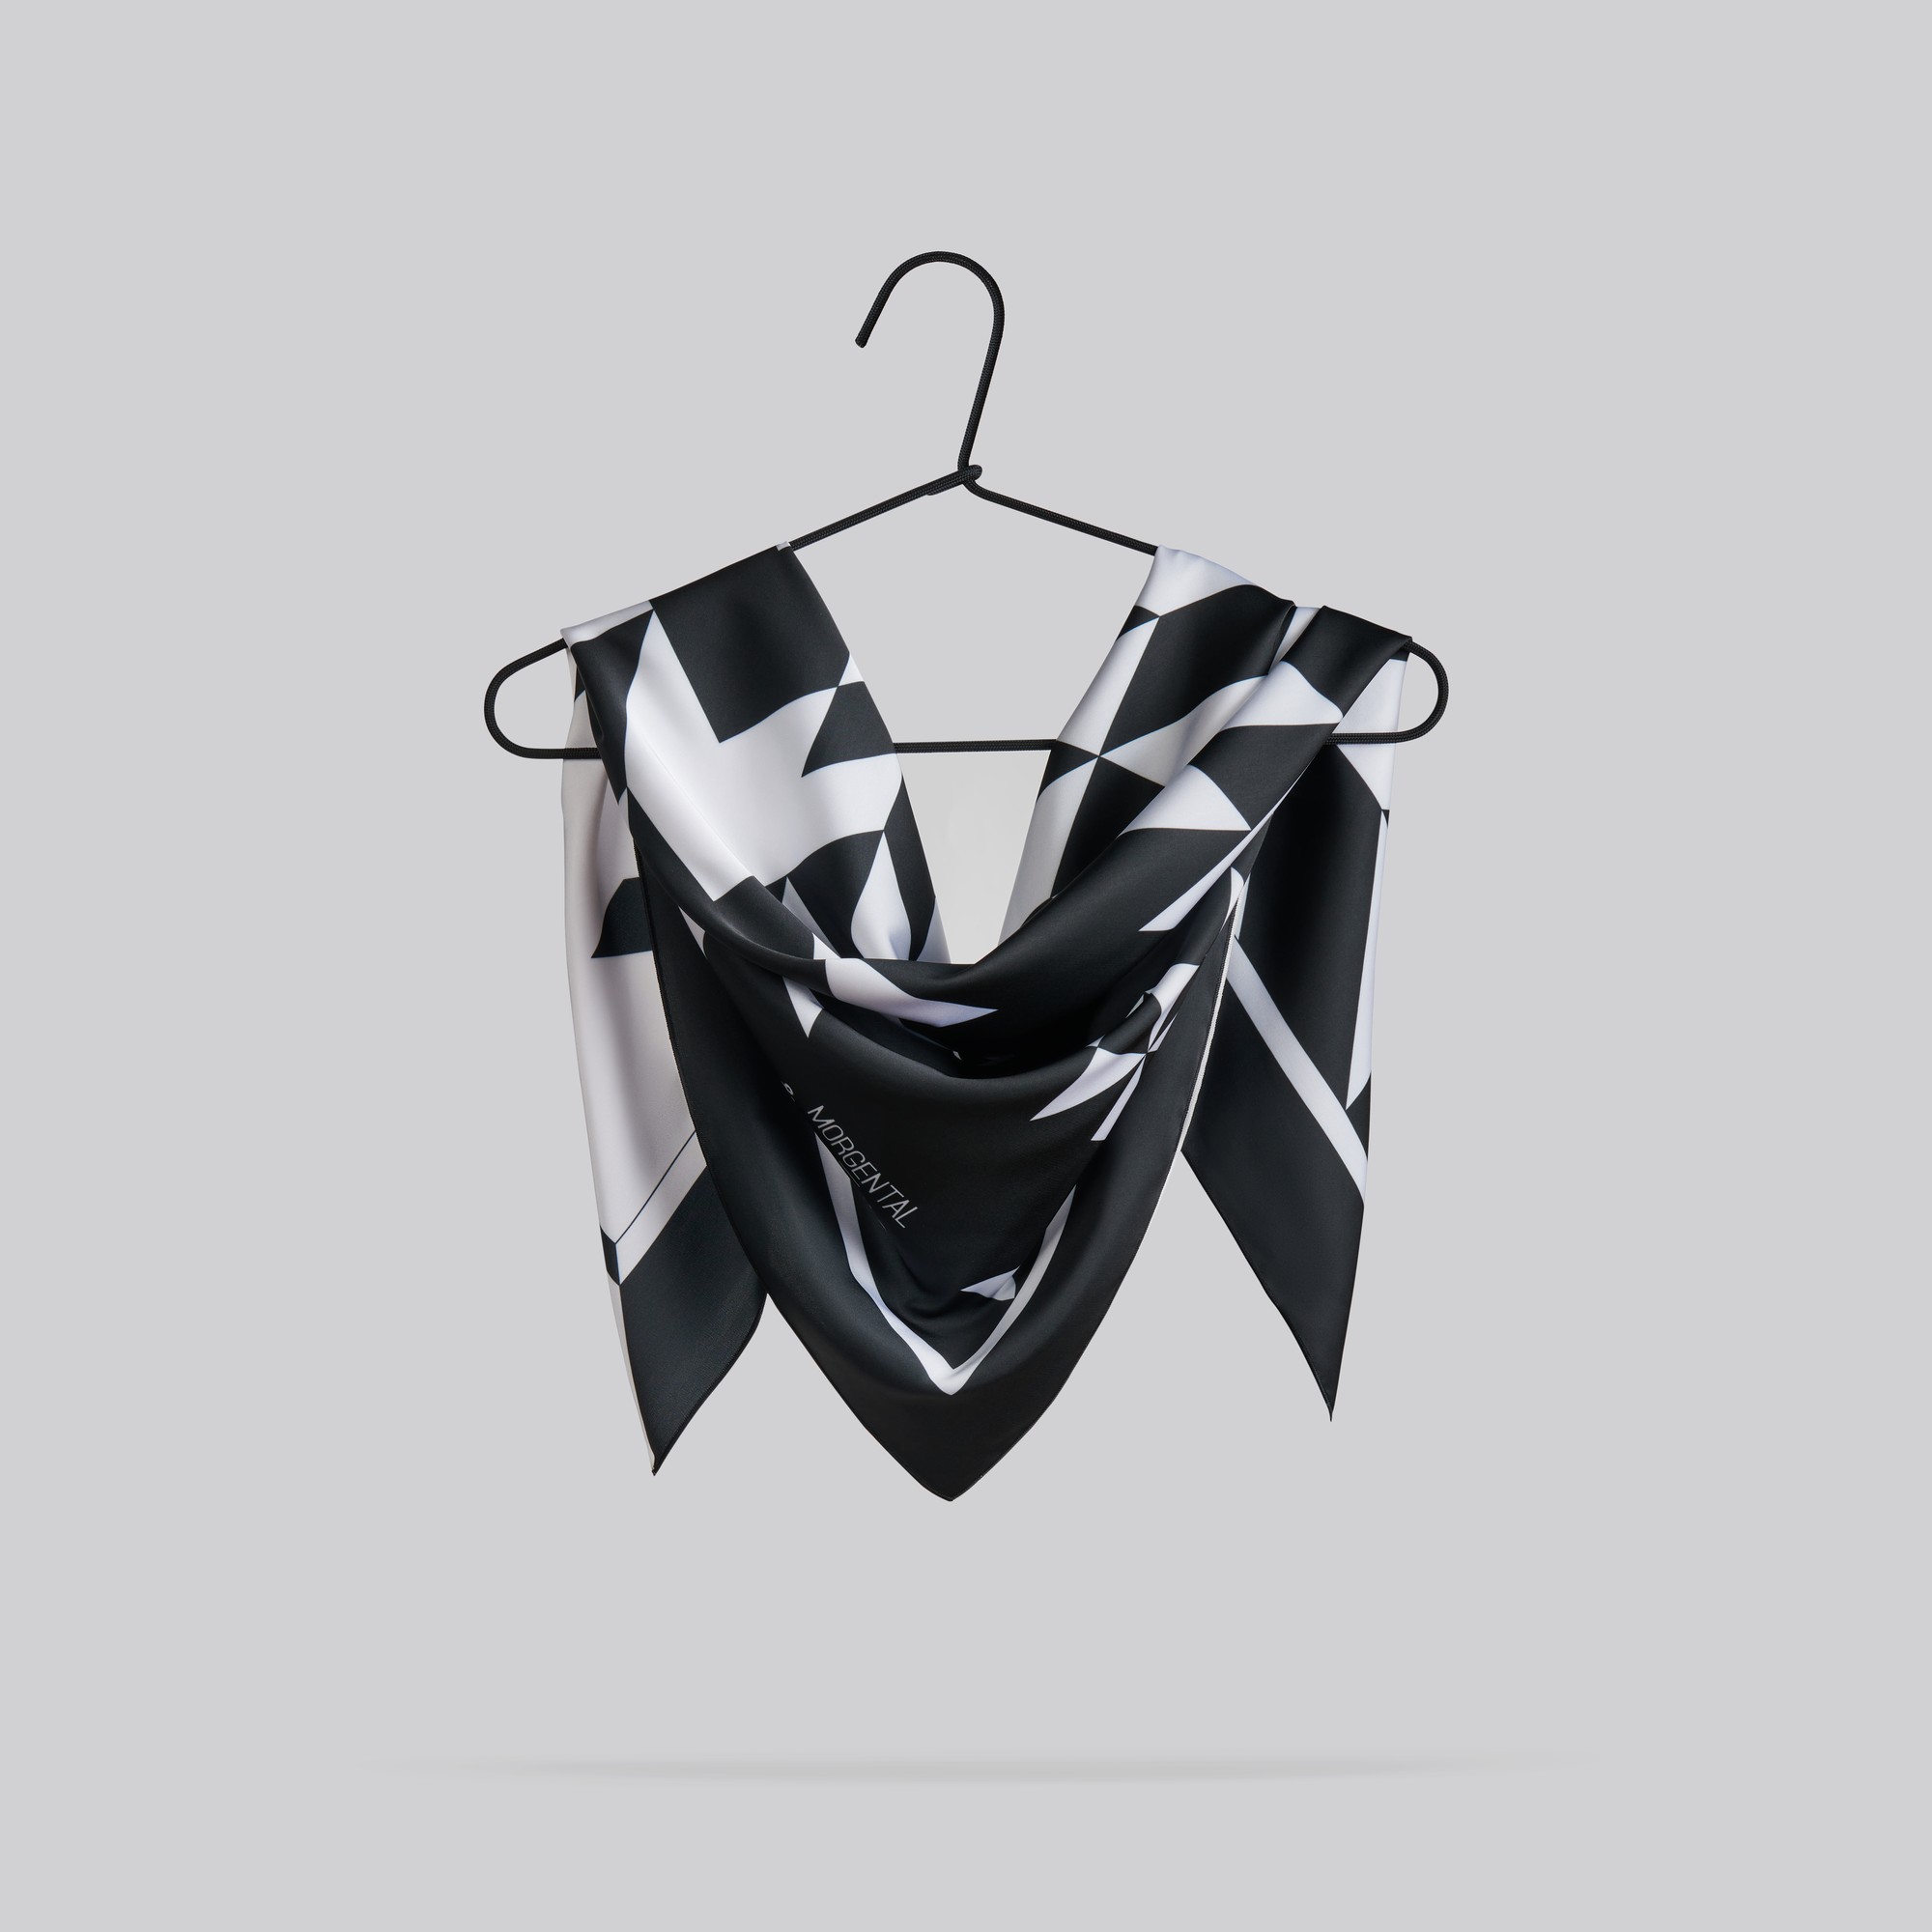 Scarf "Carpathians" Size 57*57 cm black and white silk shawl from Ukraine